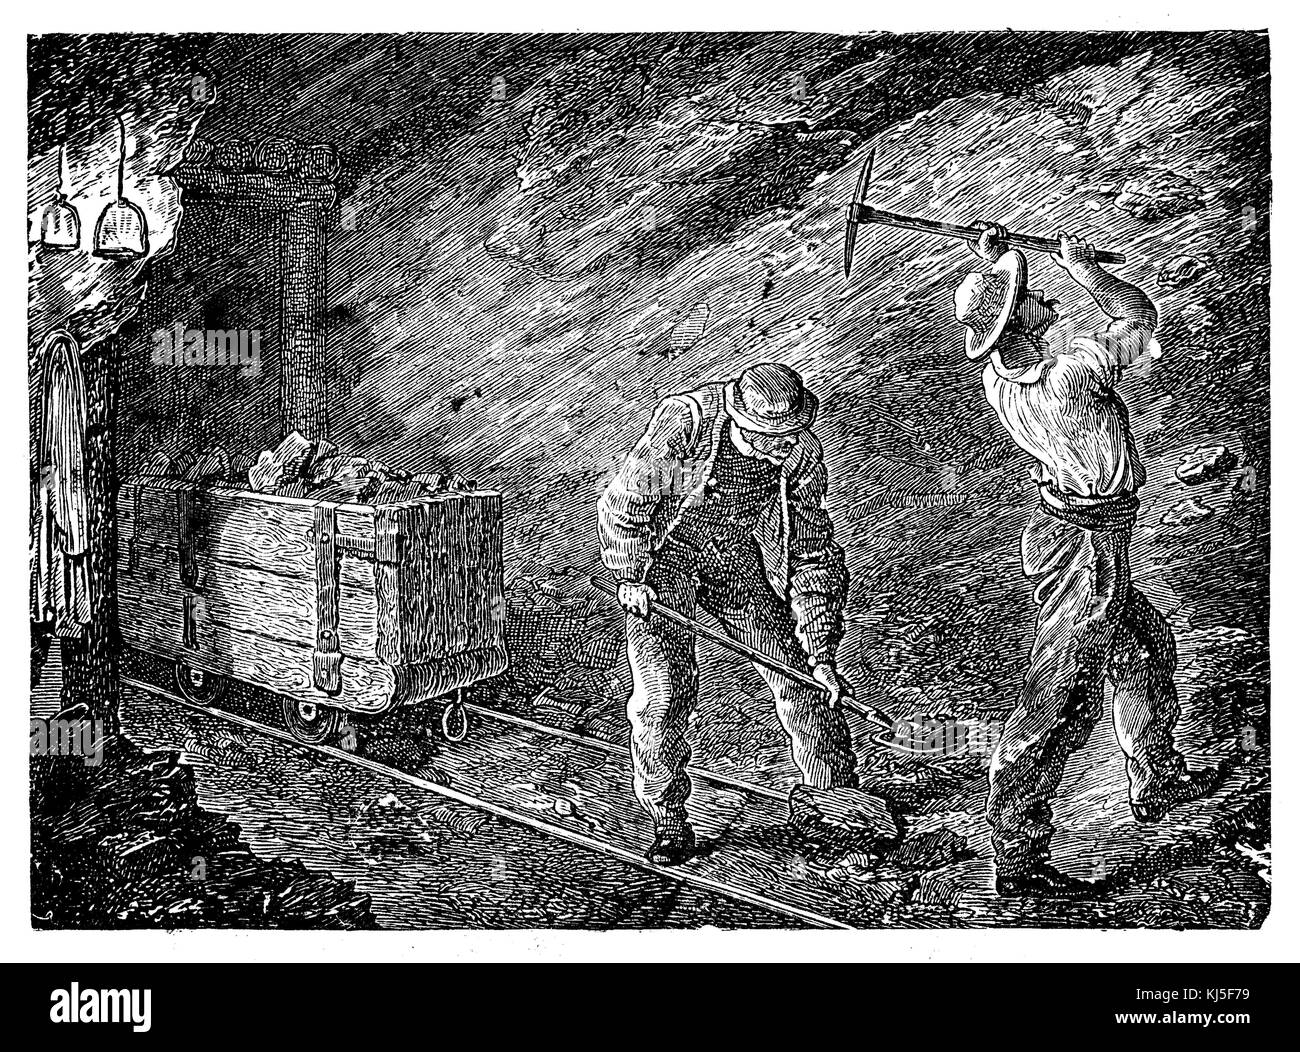 Workers in a coal mine (Arbeiter in einem Kohlenbergwerk) Stock Photo